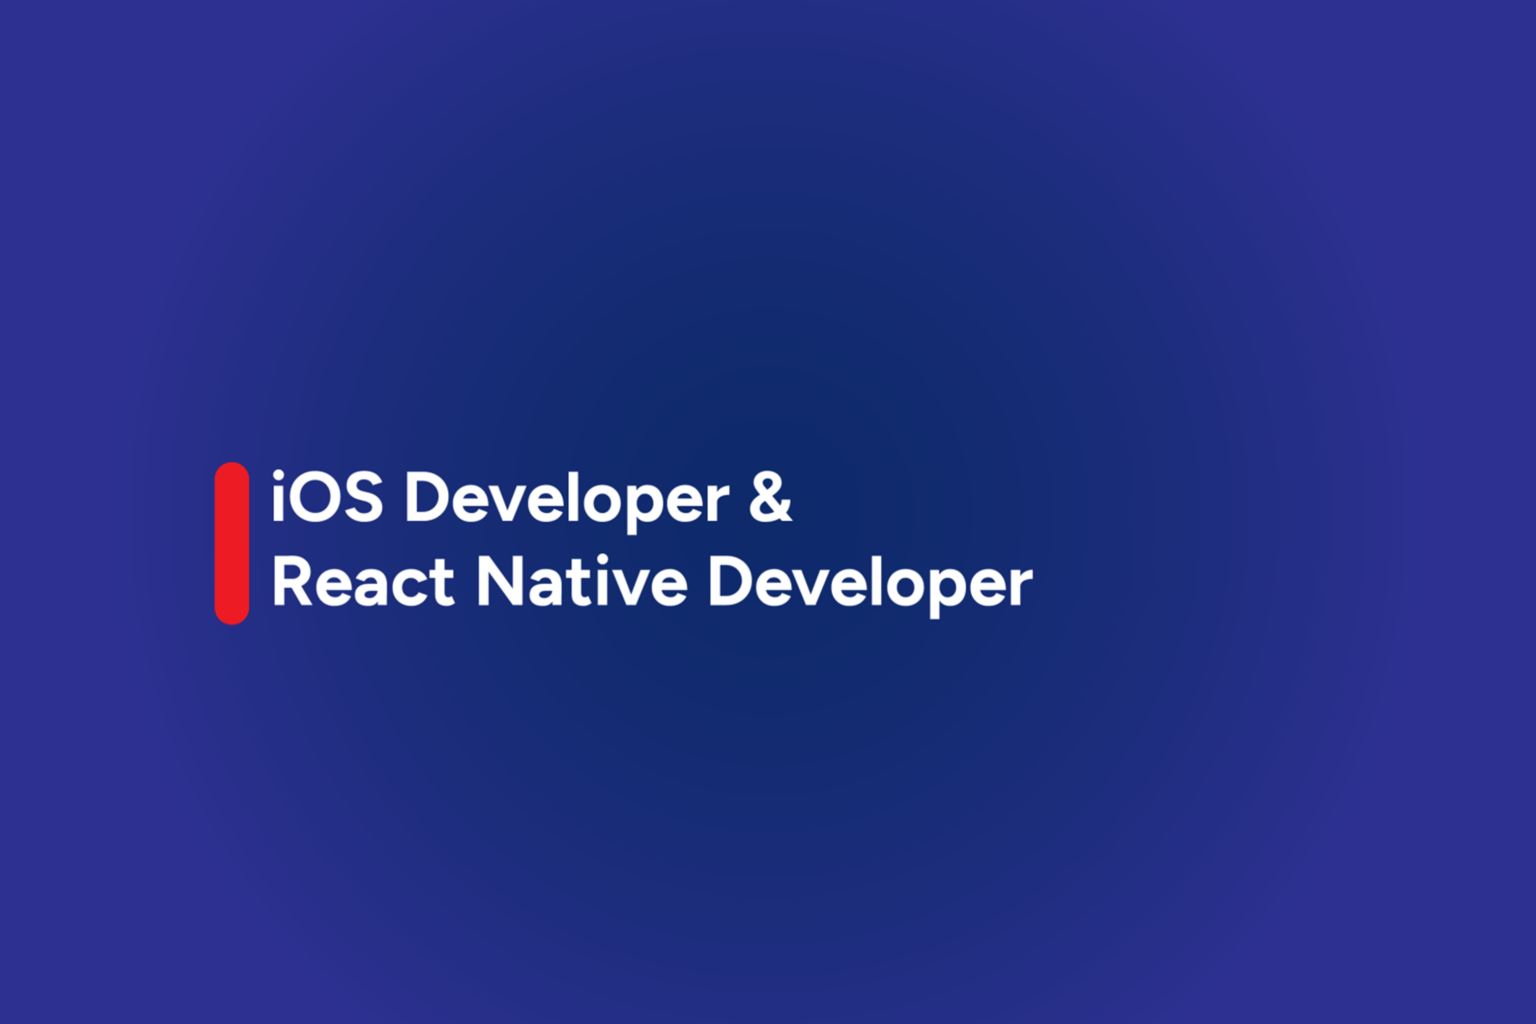 iOS Developer & React Native Developer